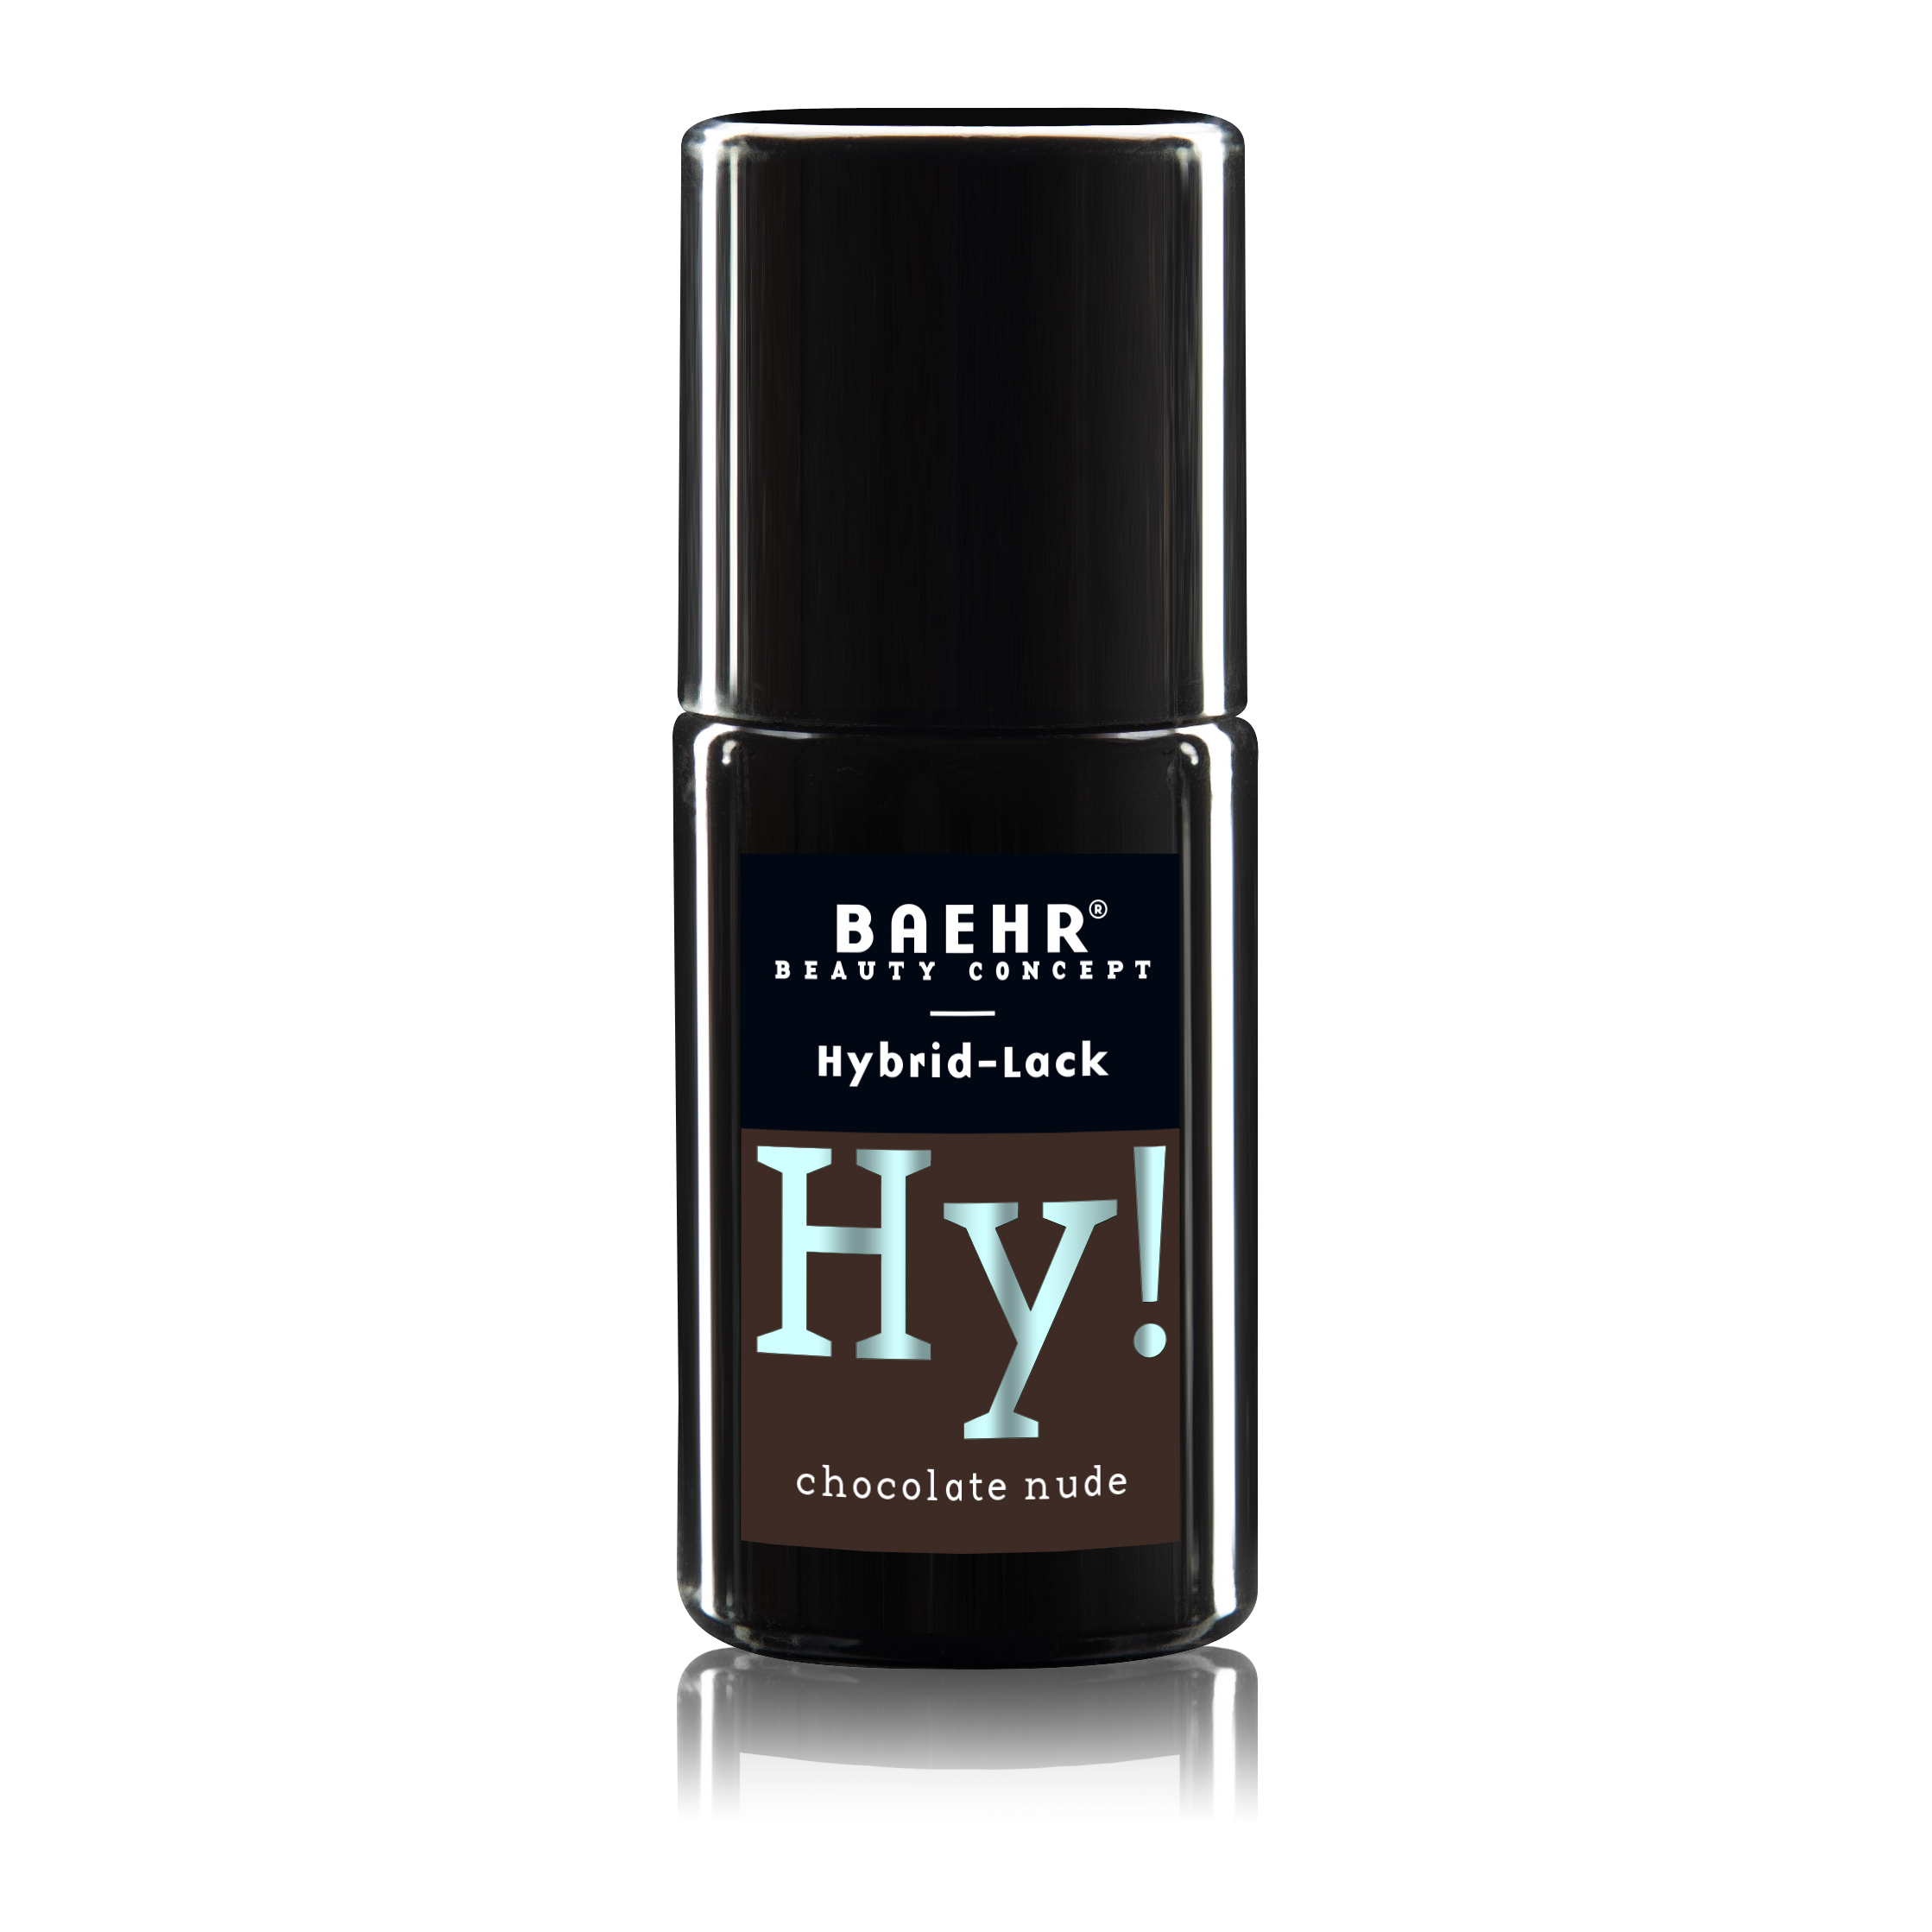 hy-hybrid-lack--chocolate-nude_27305